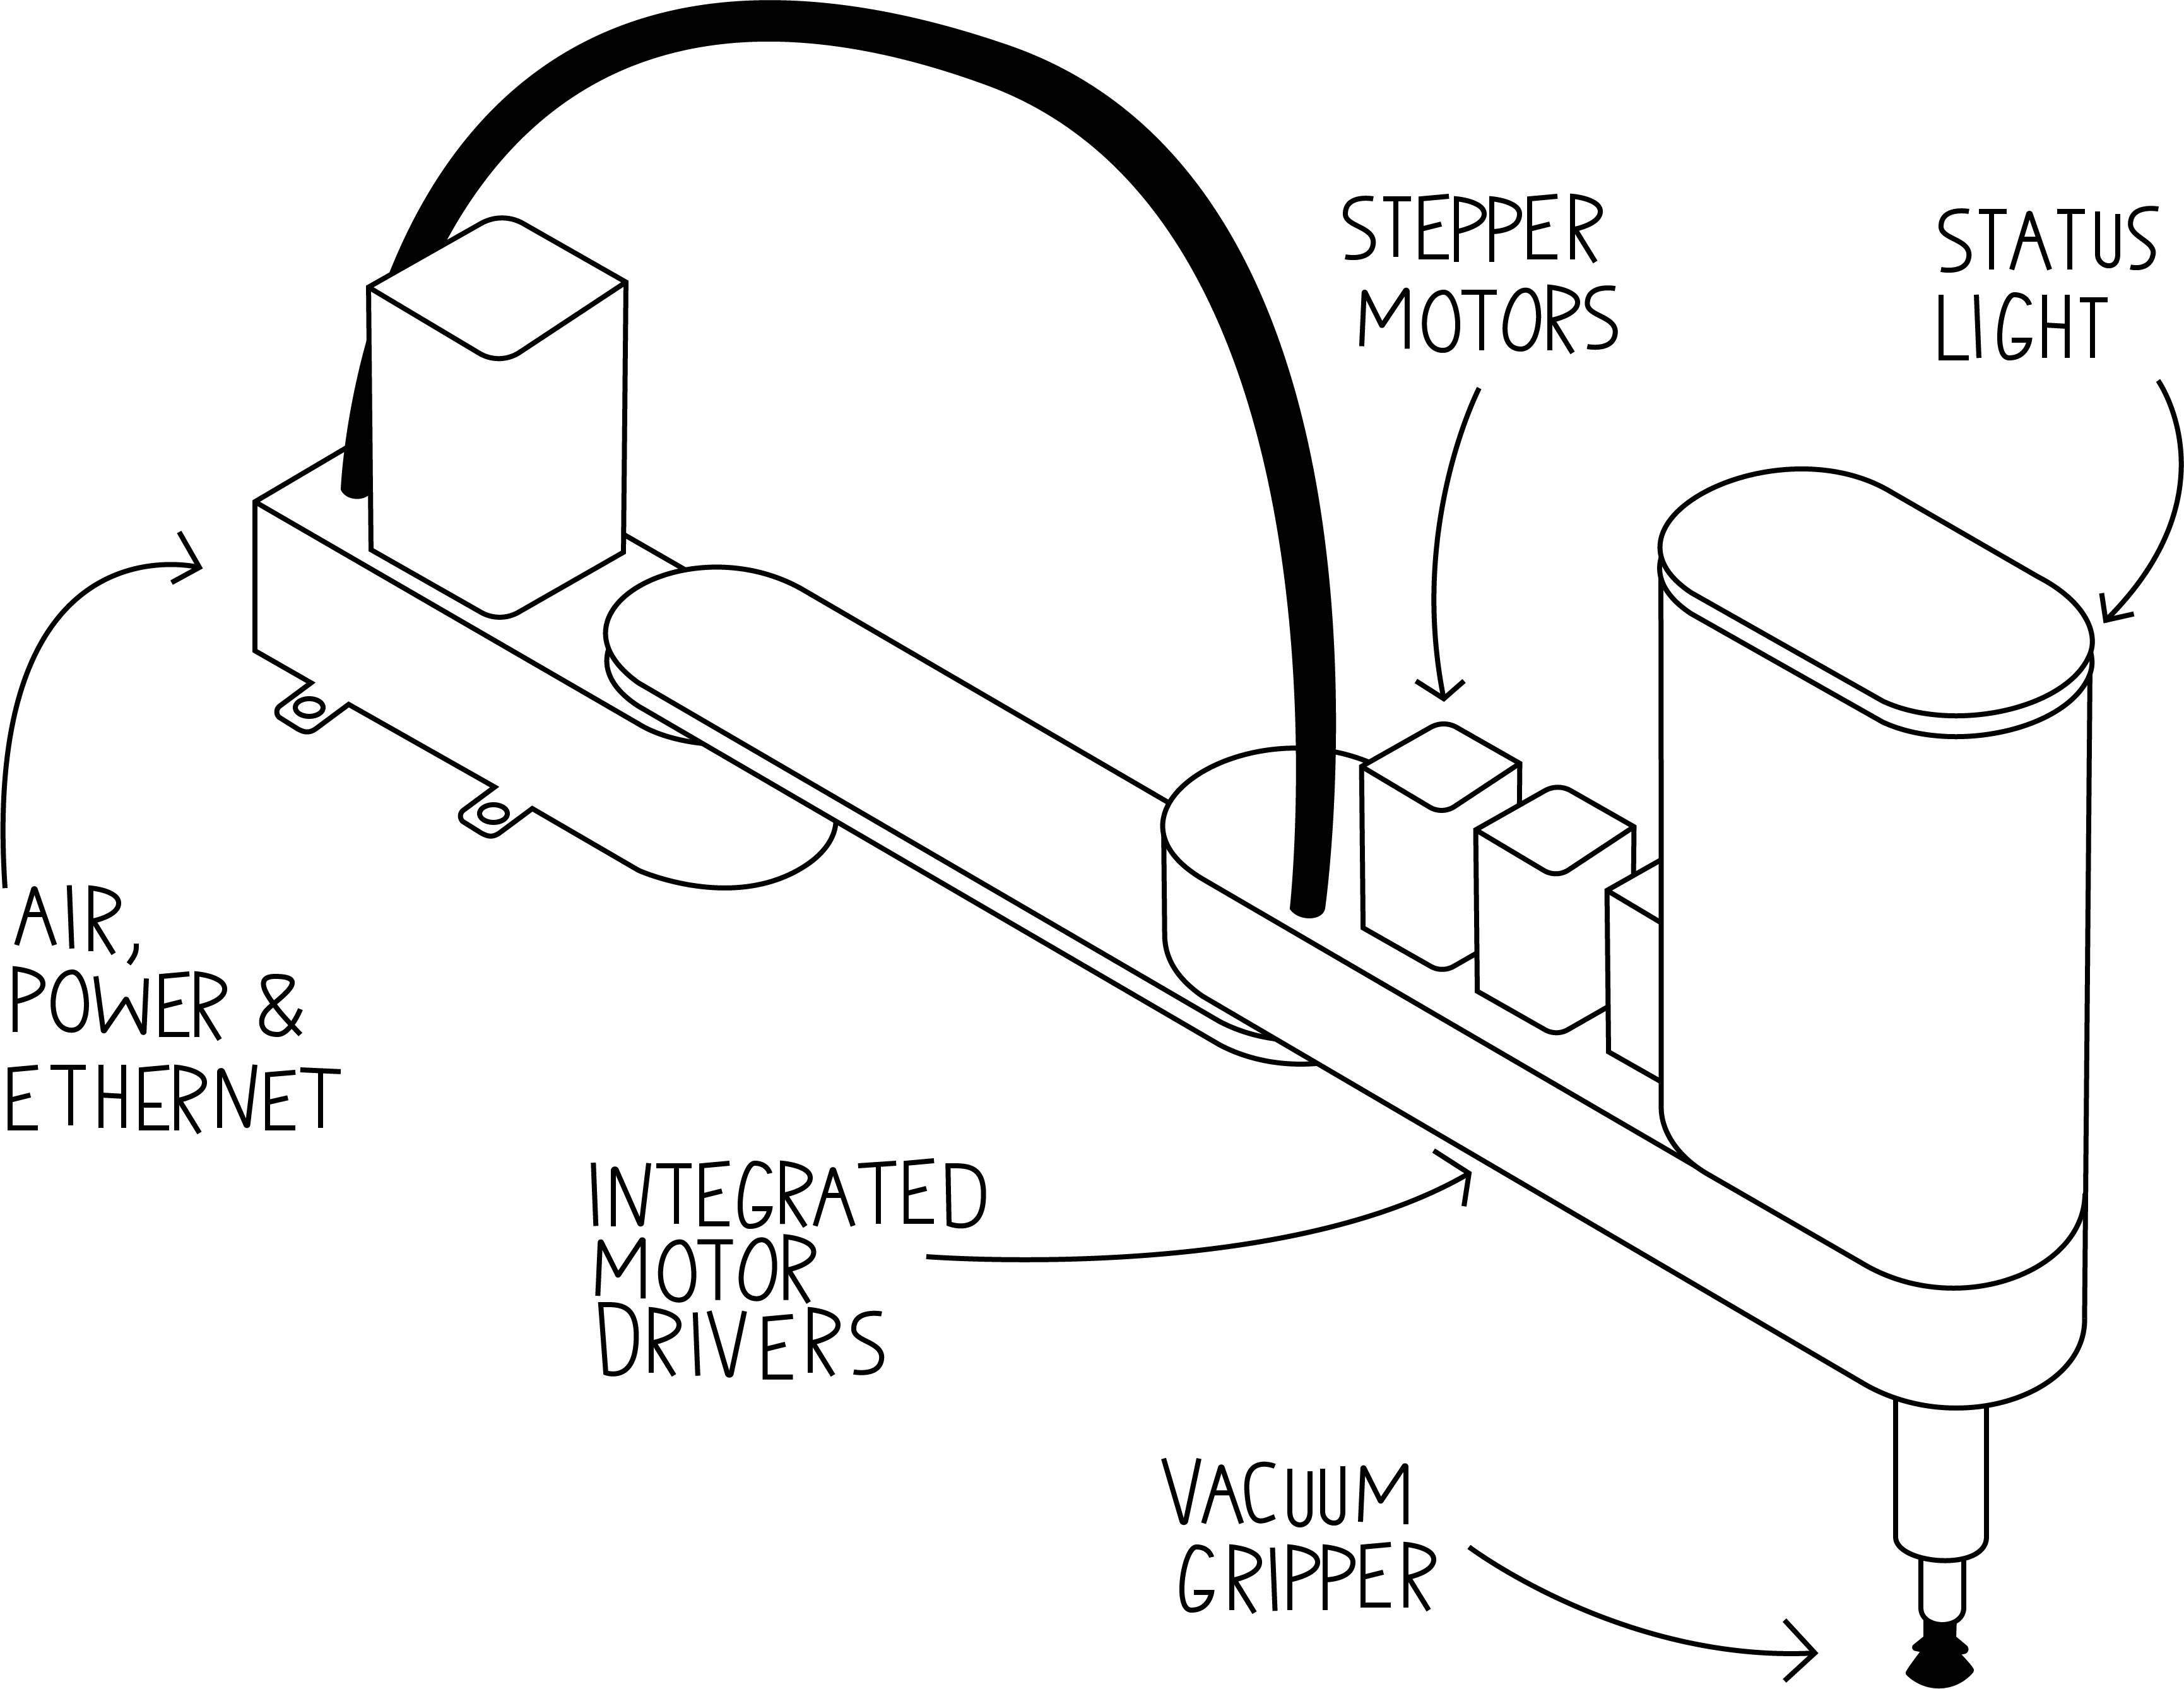 Figure 1: Robot overview sketch